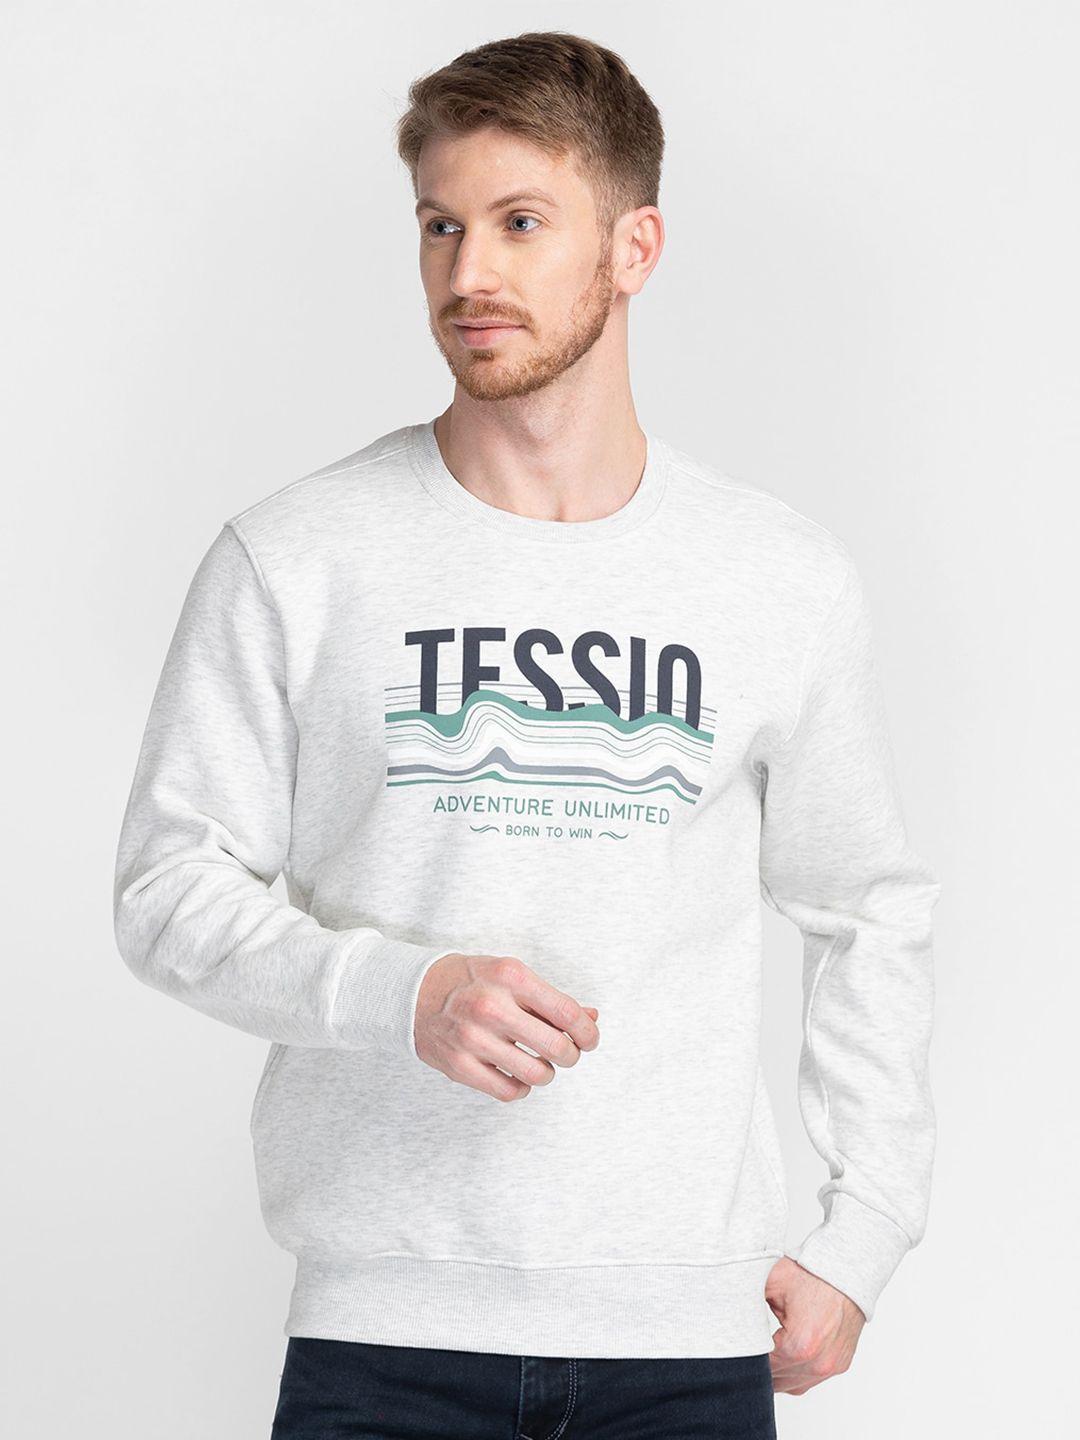 tessio men cream-coloured printed sweatshirt